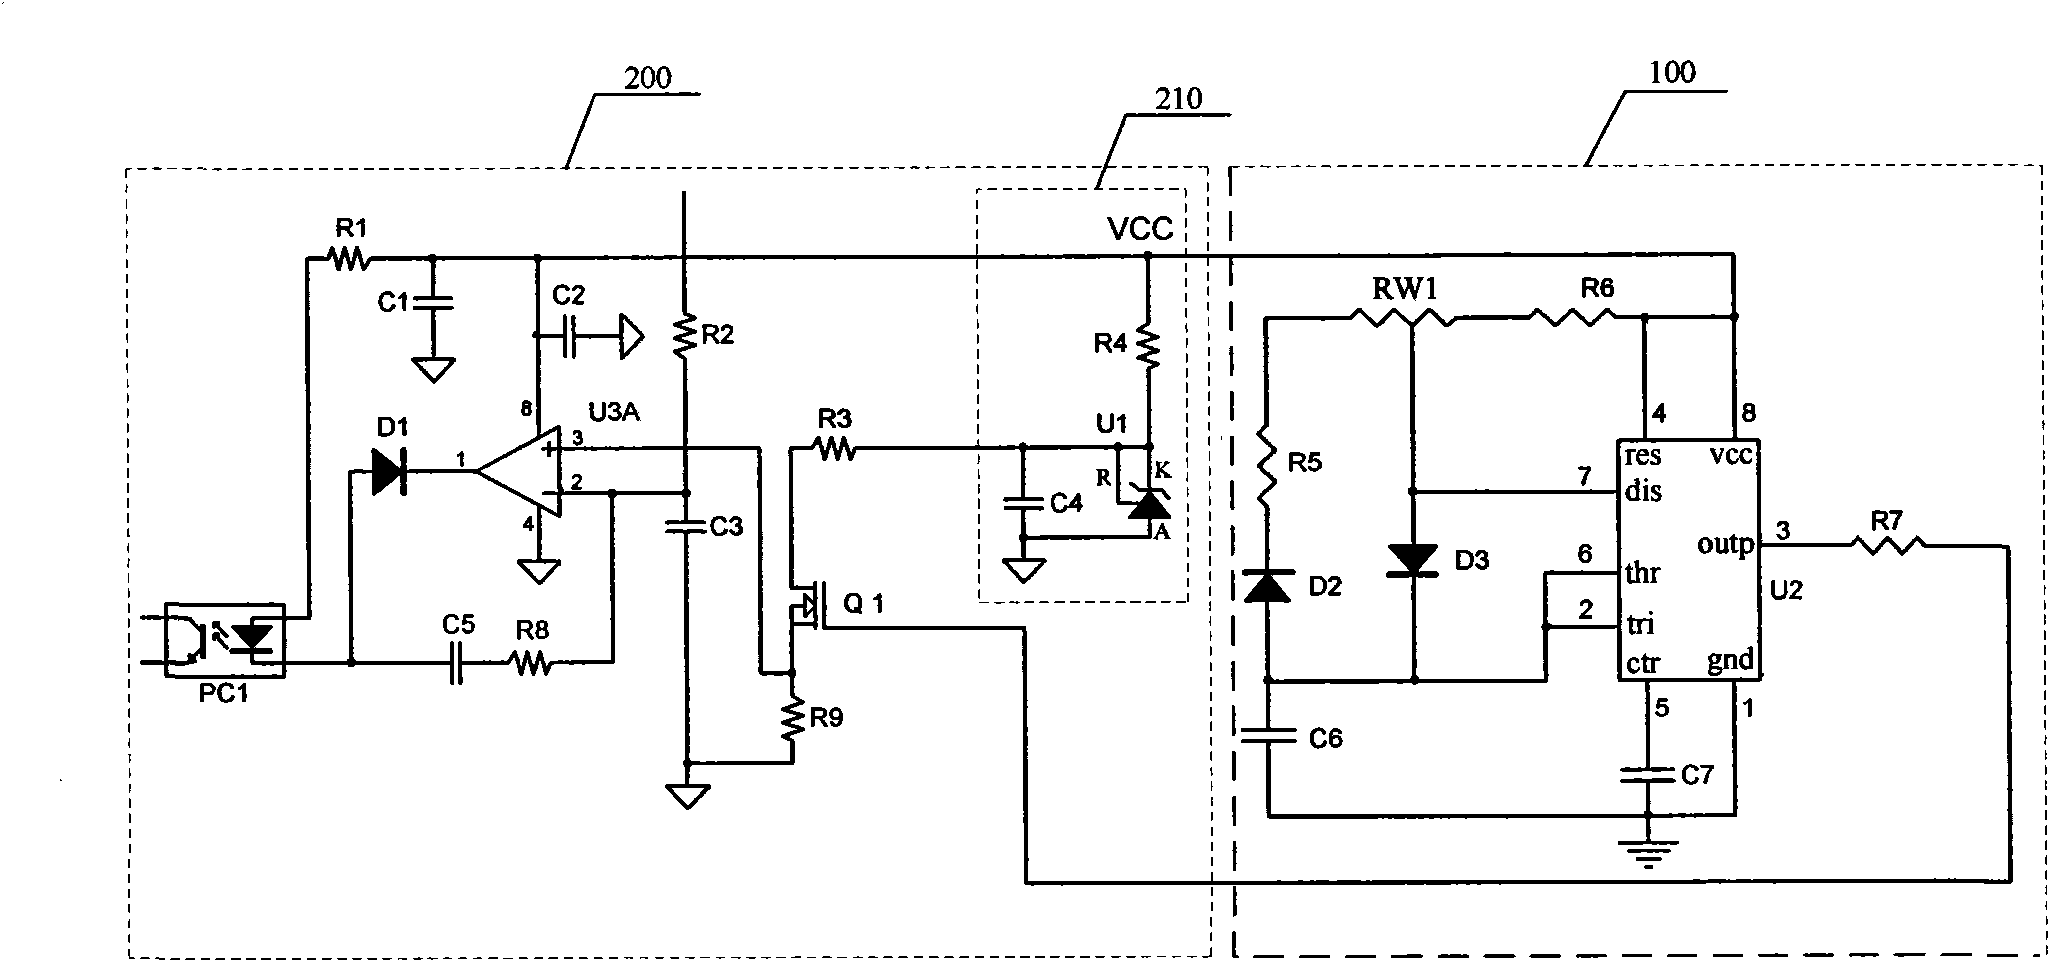 LED dimming control circuit